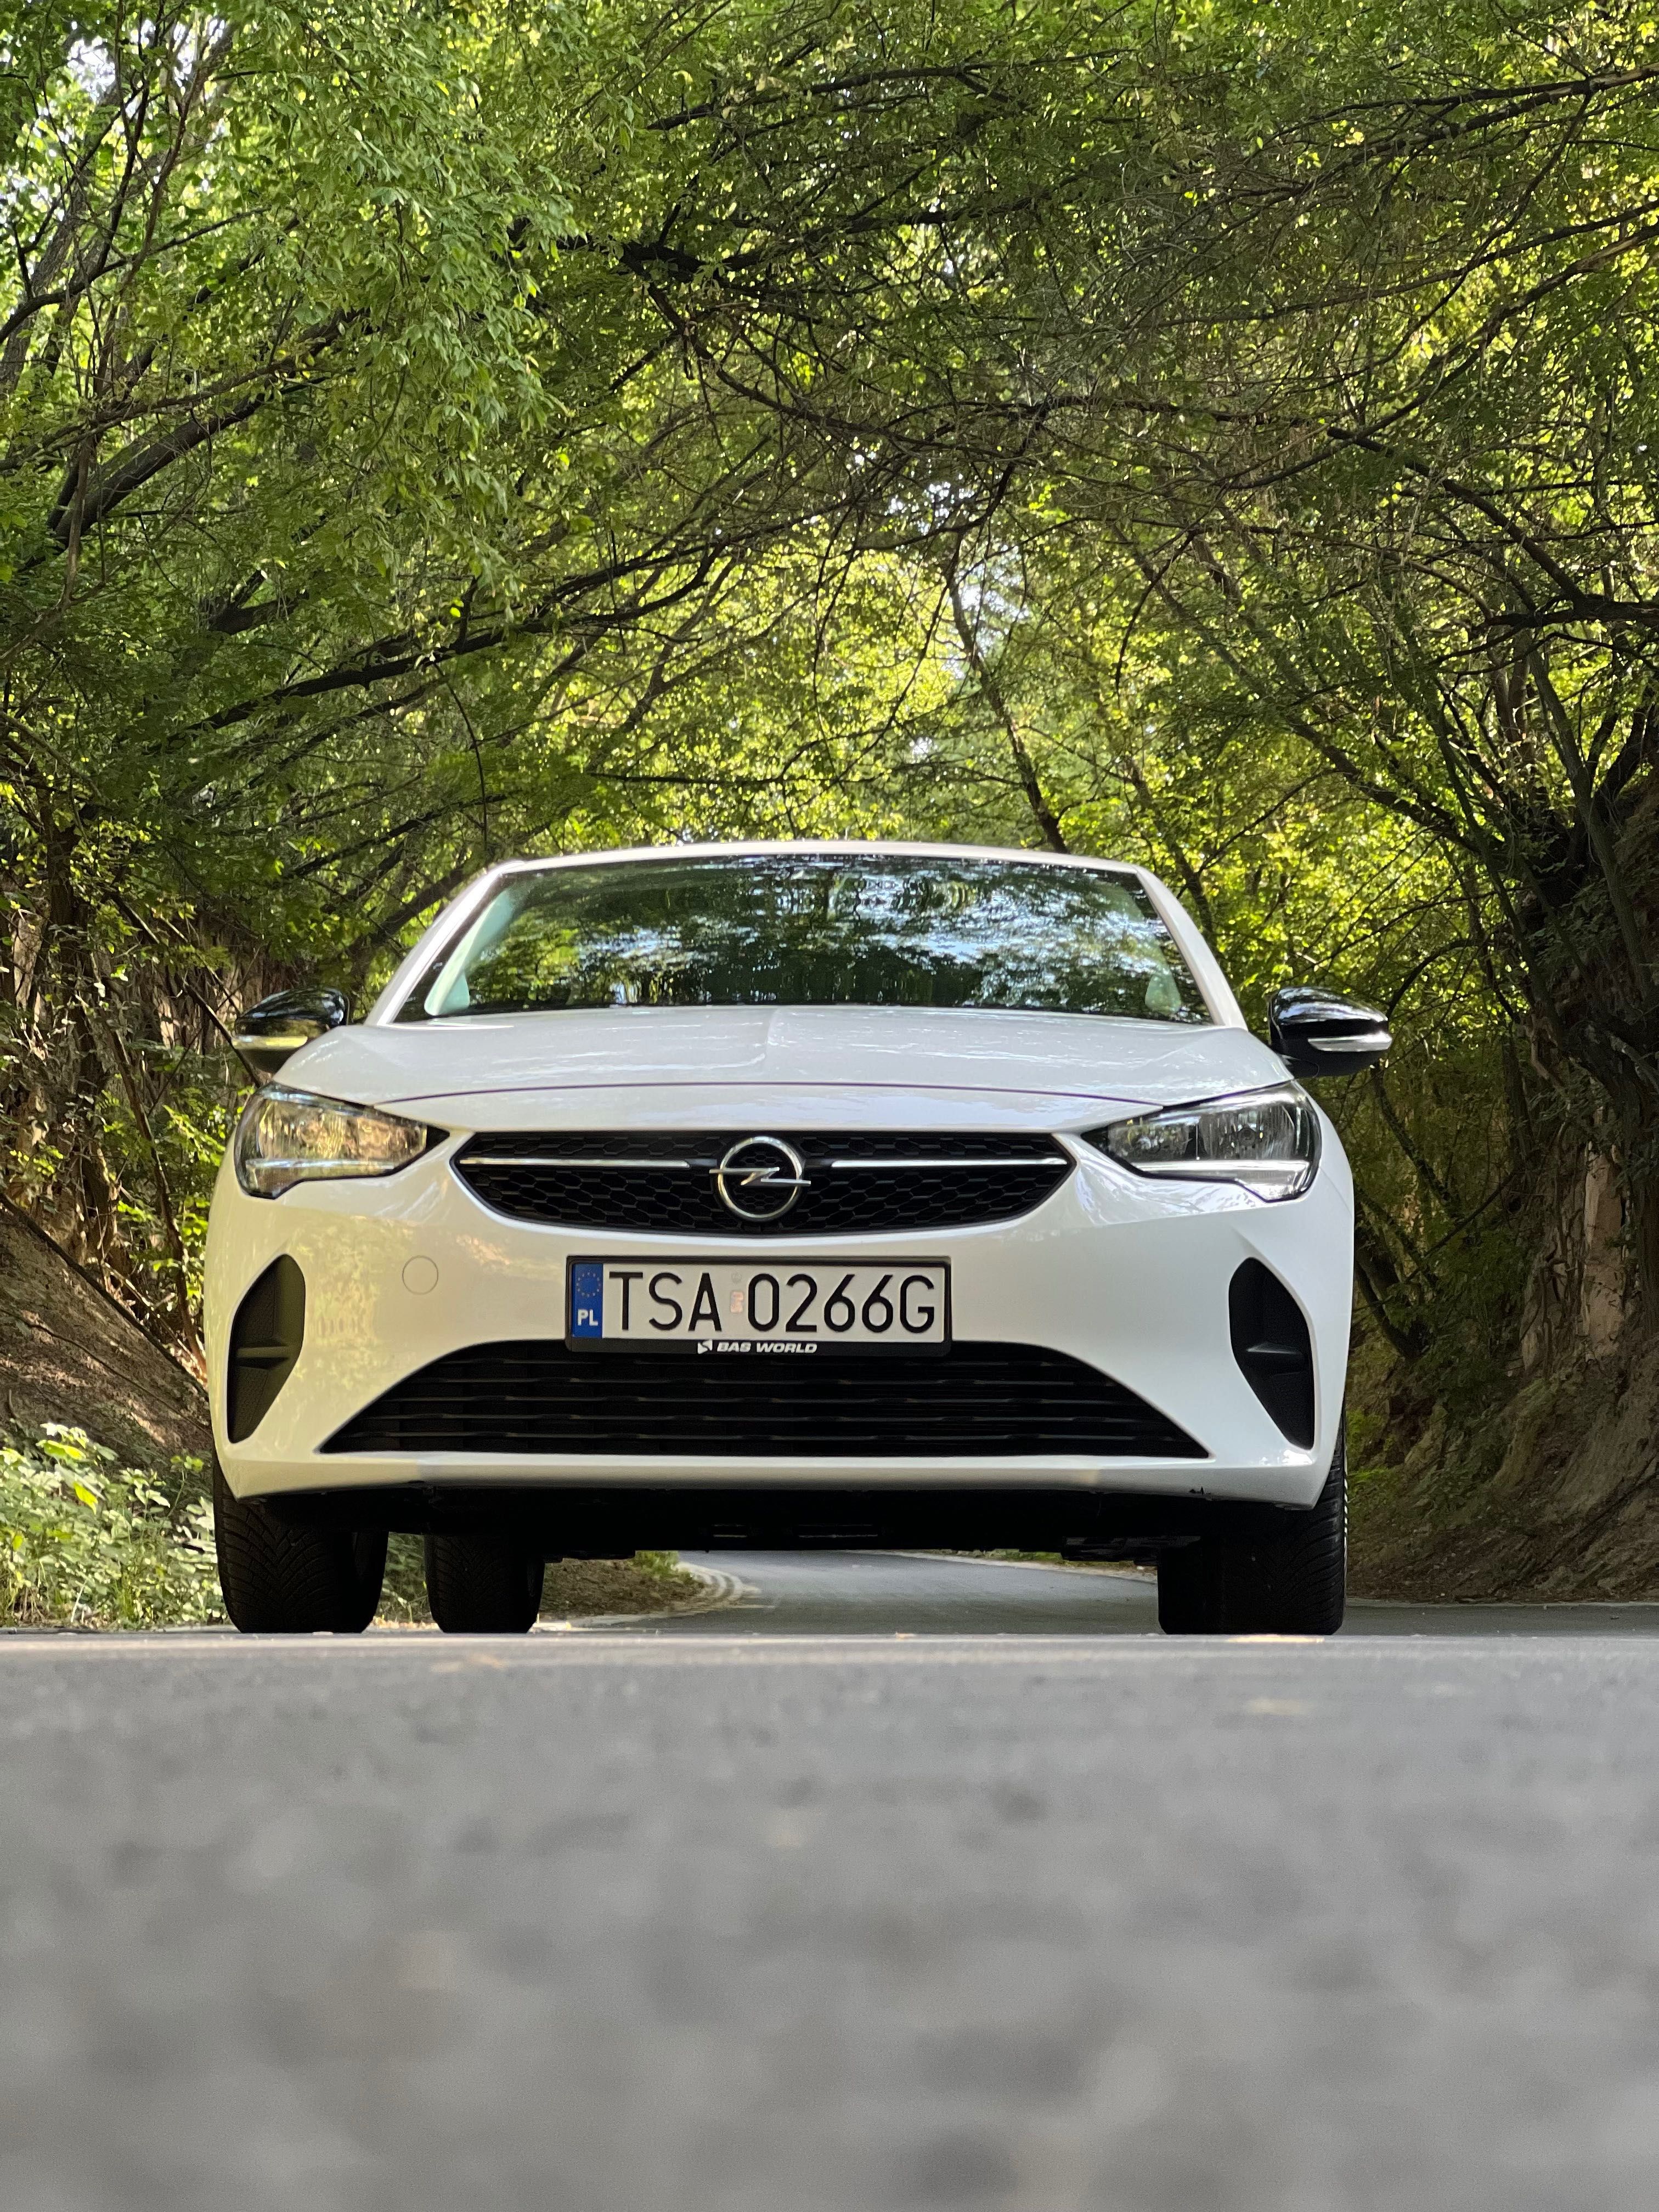 Opel Corsa F 2022 rok 1.2 przebieg ori okazja Polecam